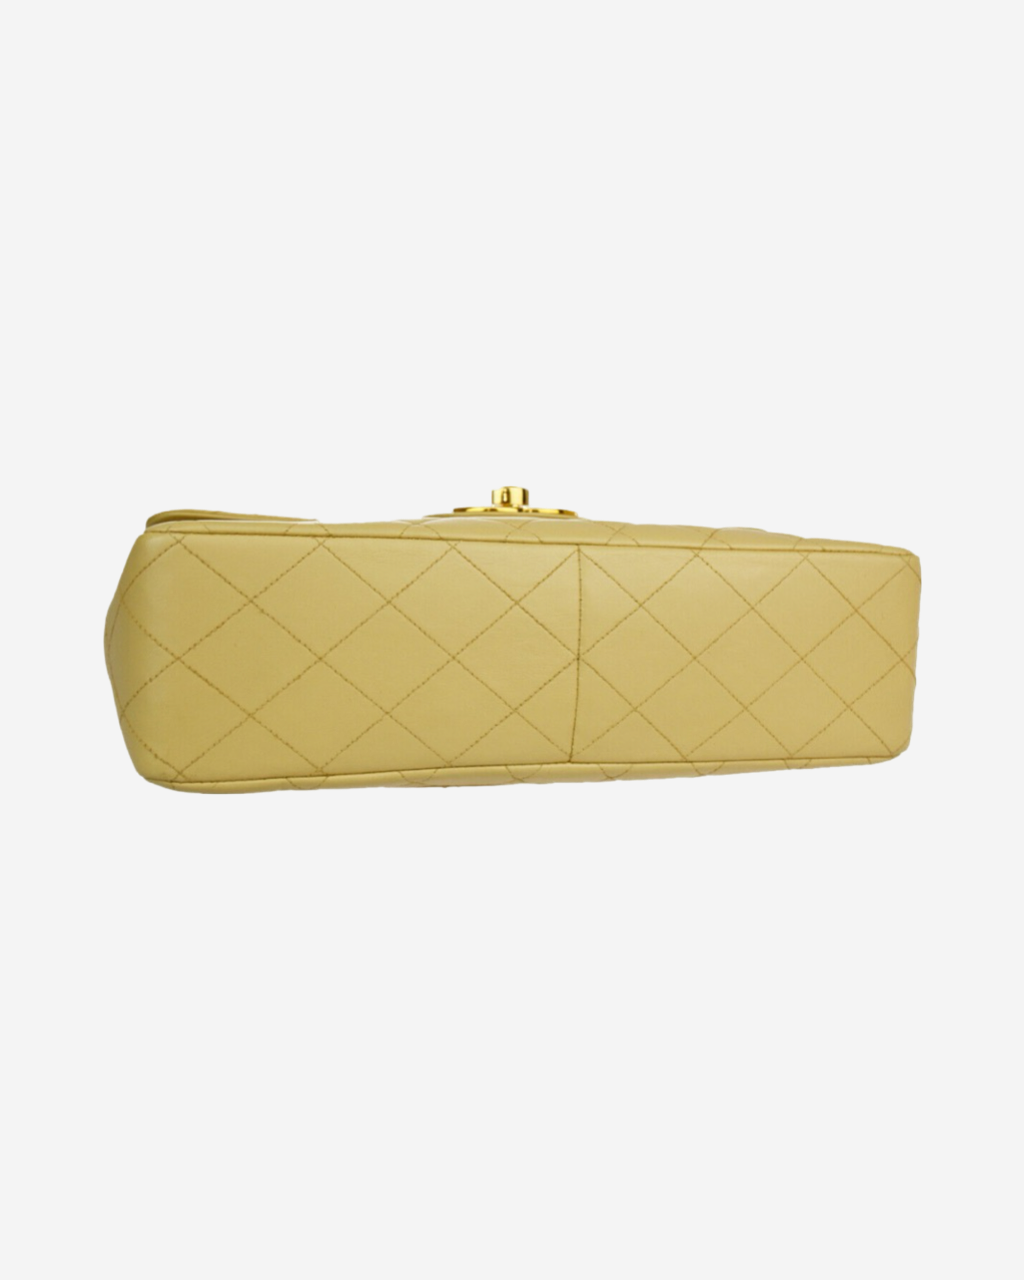 Chanel Classic Flap Jumbo Bag